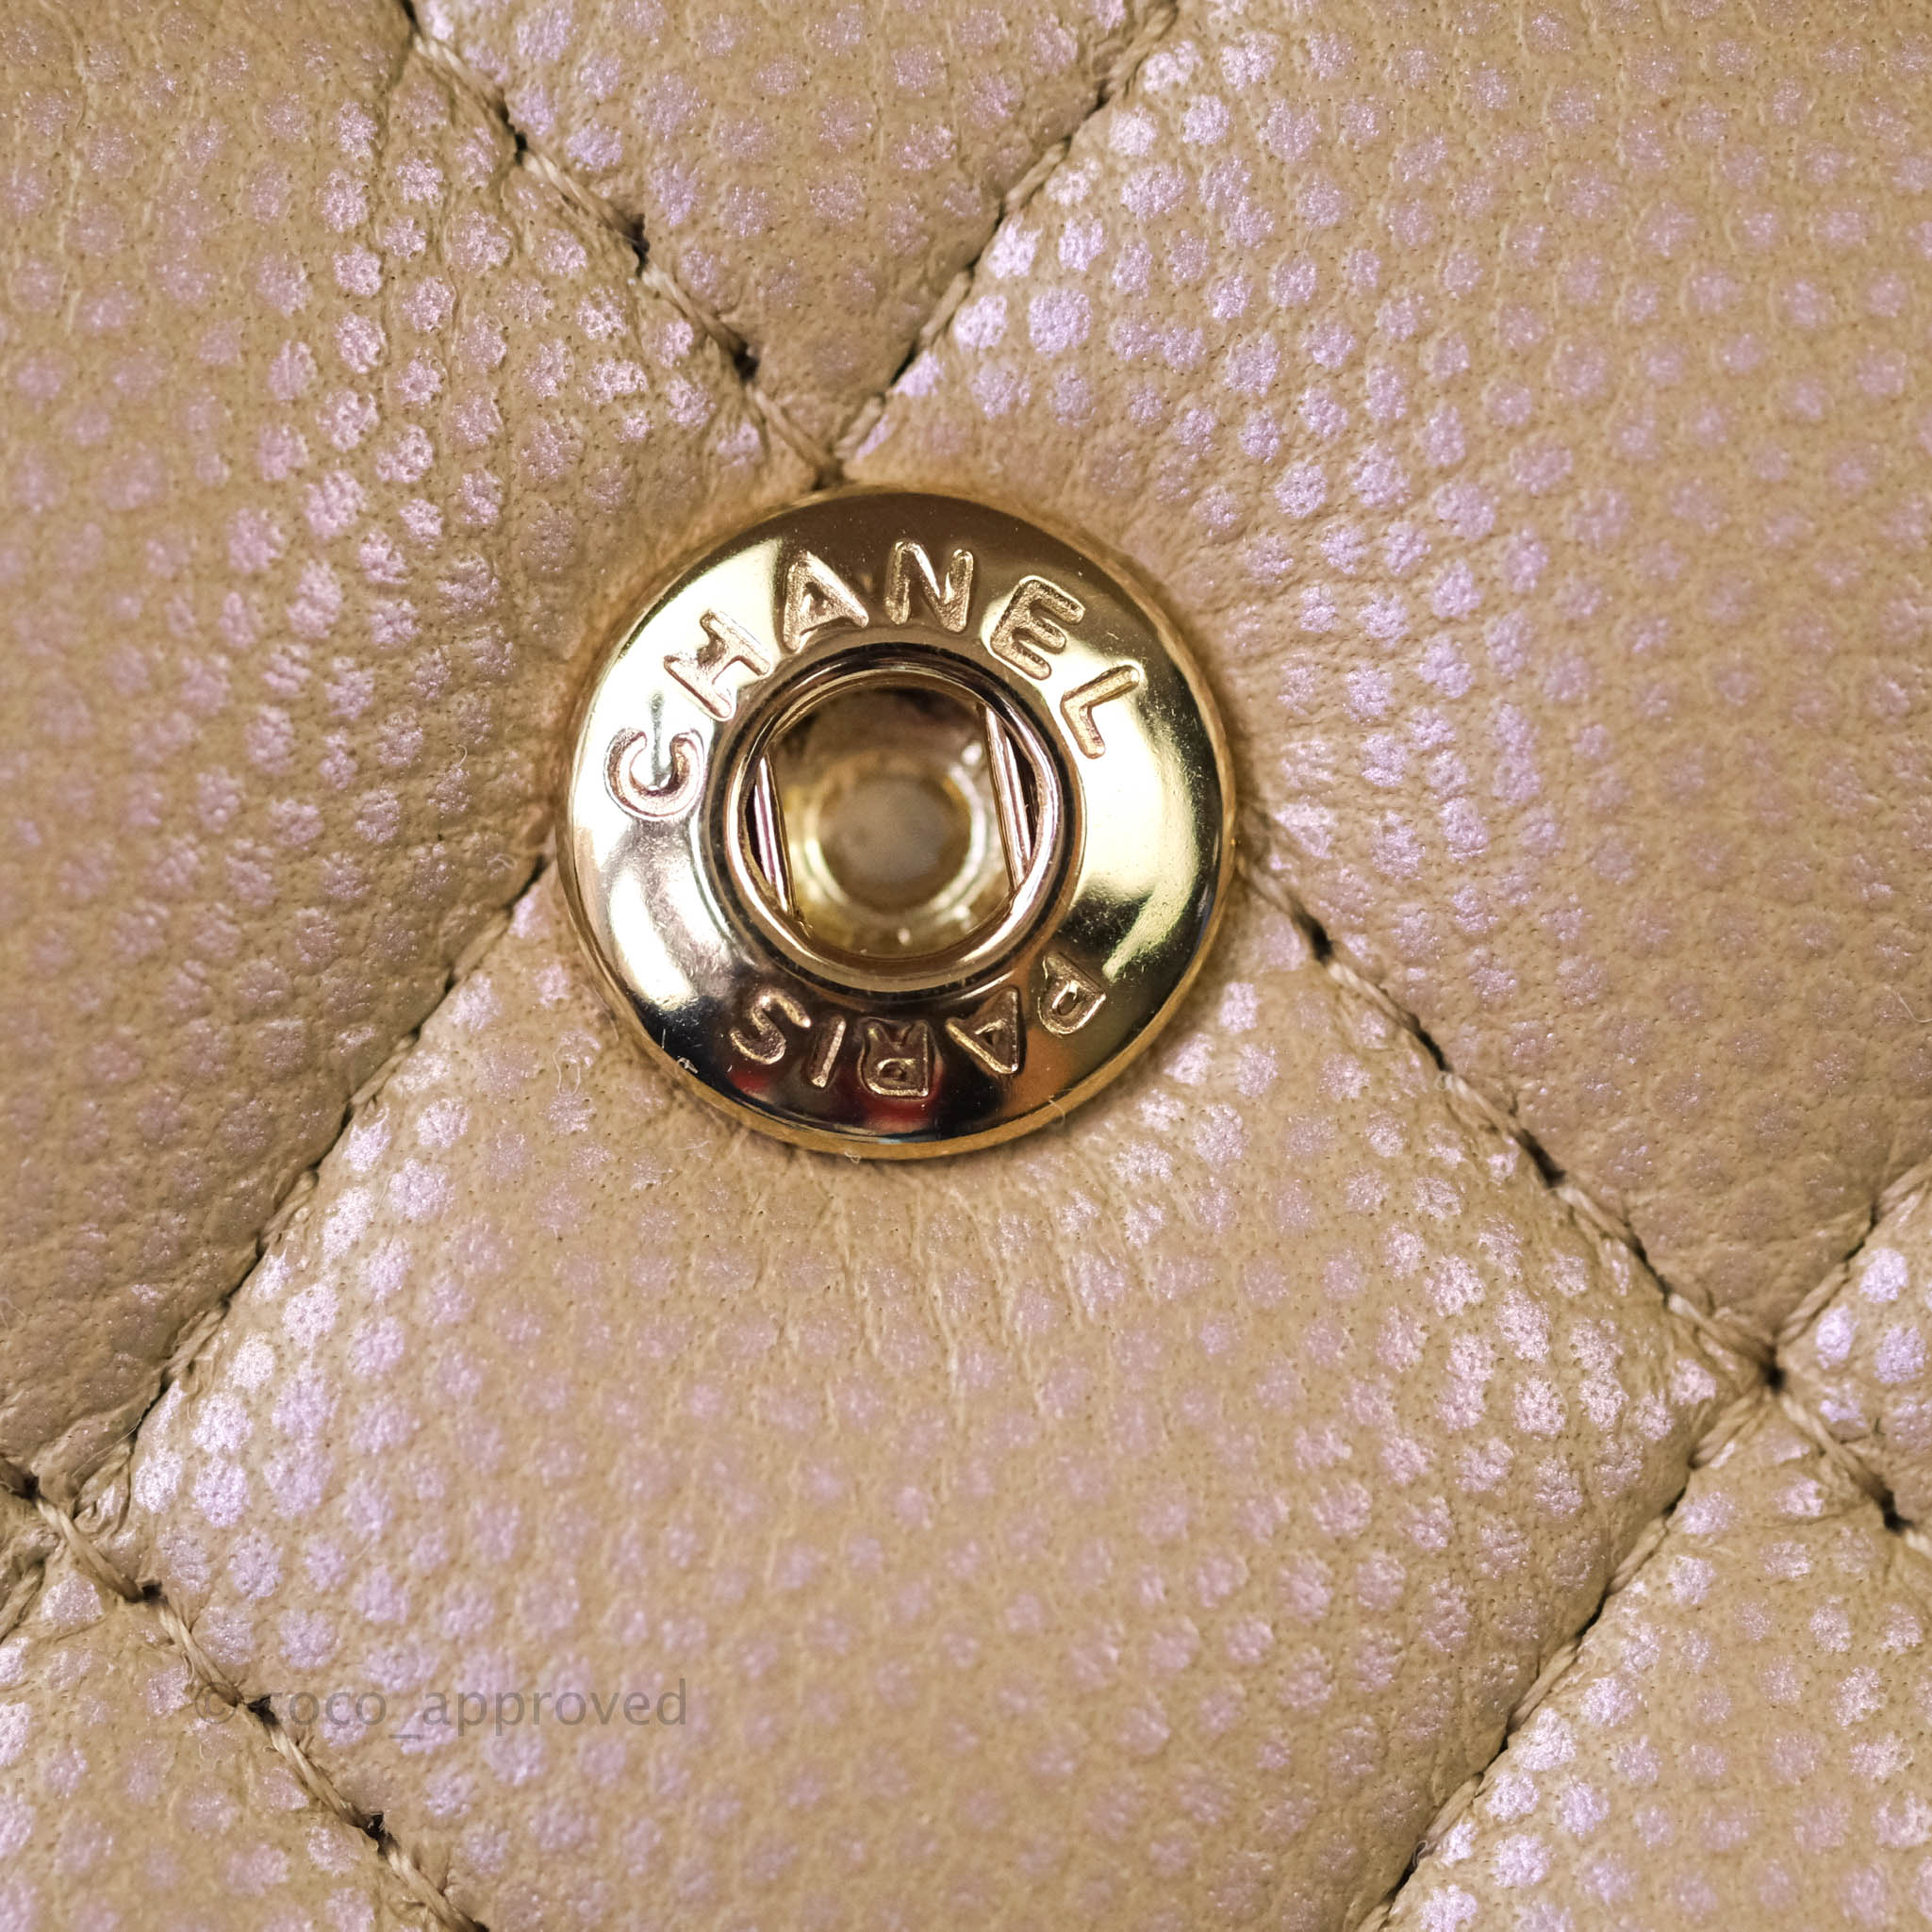 Chanel M/L Medium Double Flap Bag Iridescent Dark Beige Caviar Gold Ha – Coco  Approved Studio